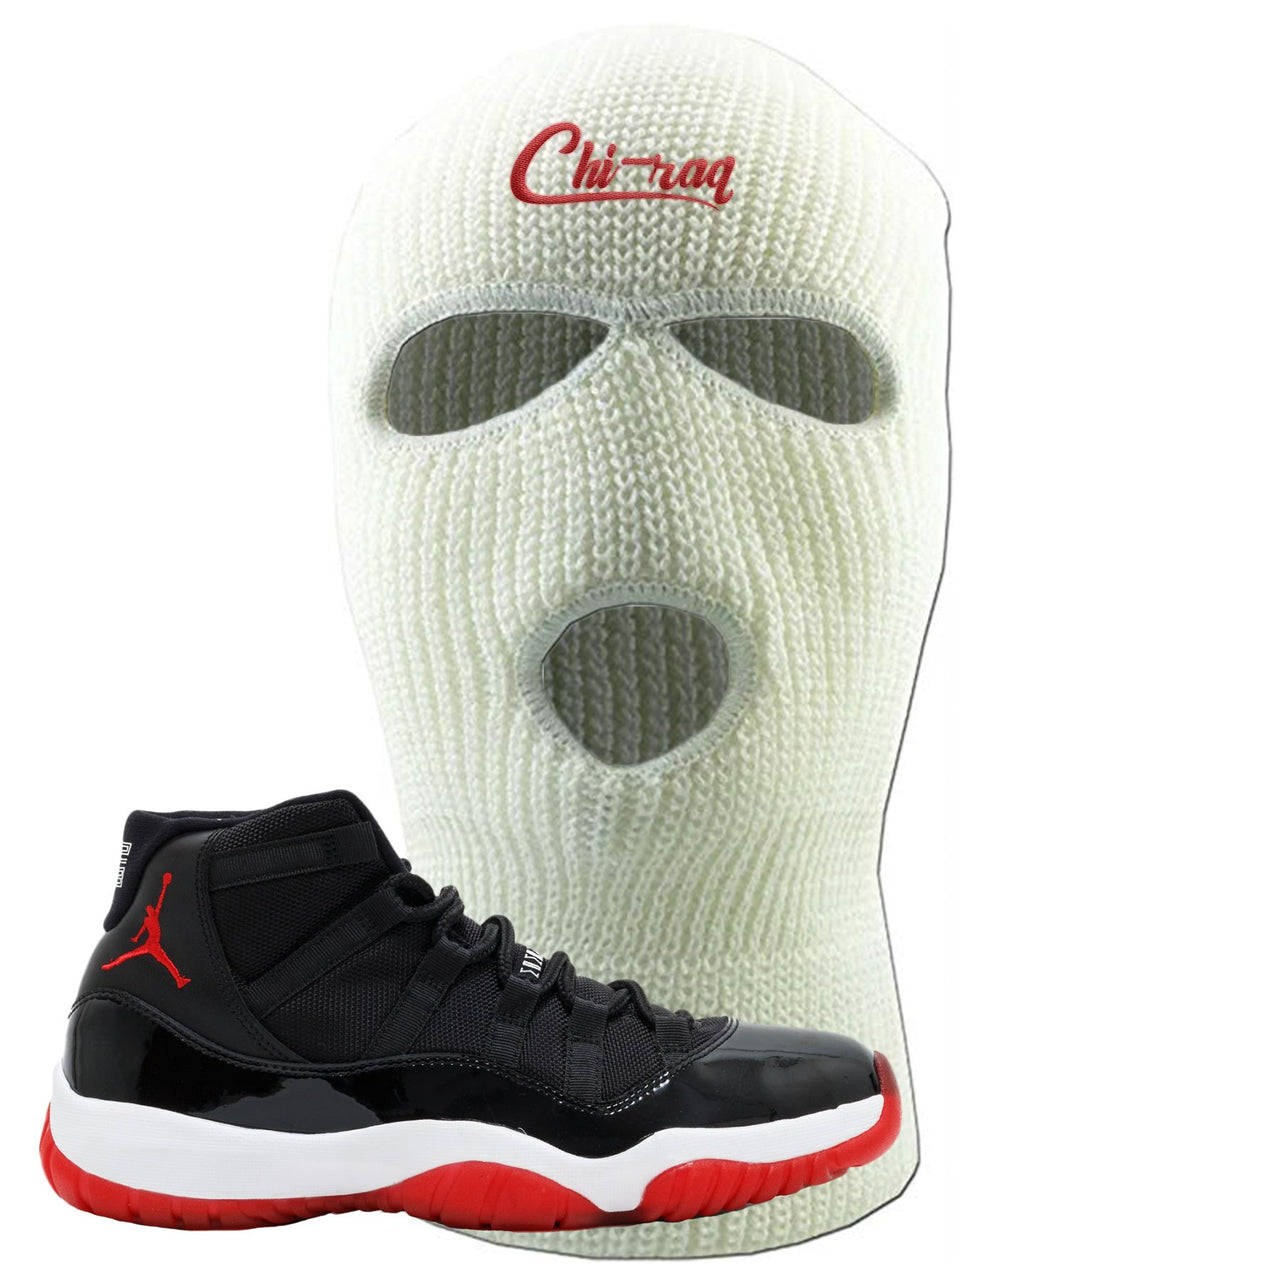 Jordan 11 Bred Chi-raq White Sneaker Hook Up Ski Mask